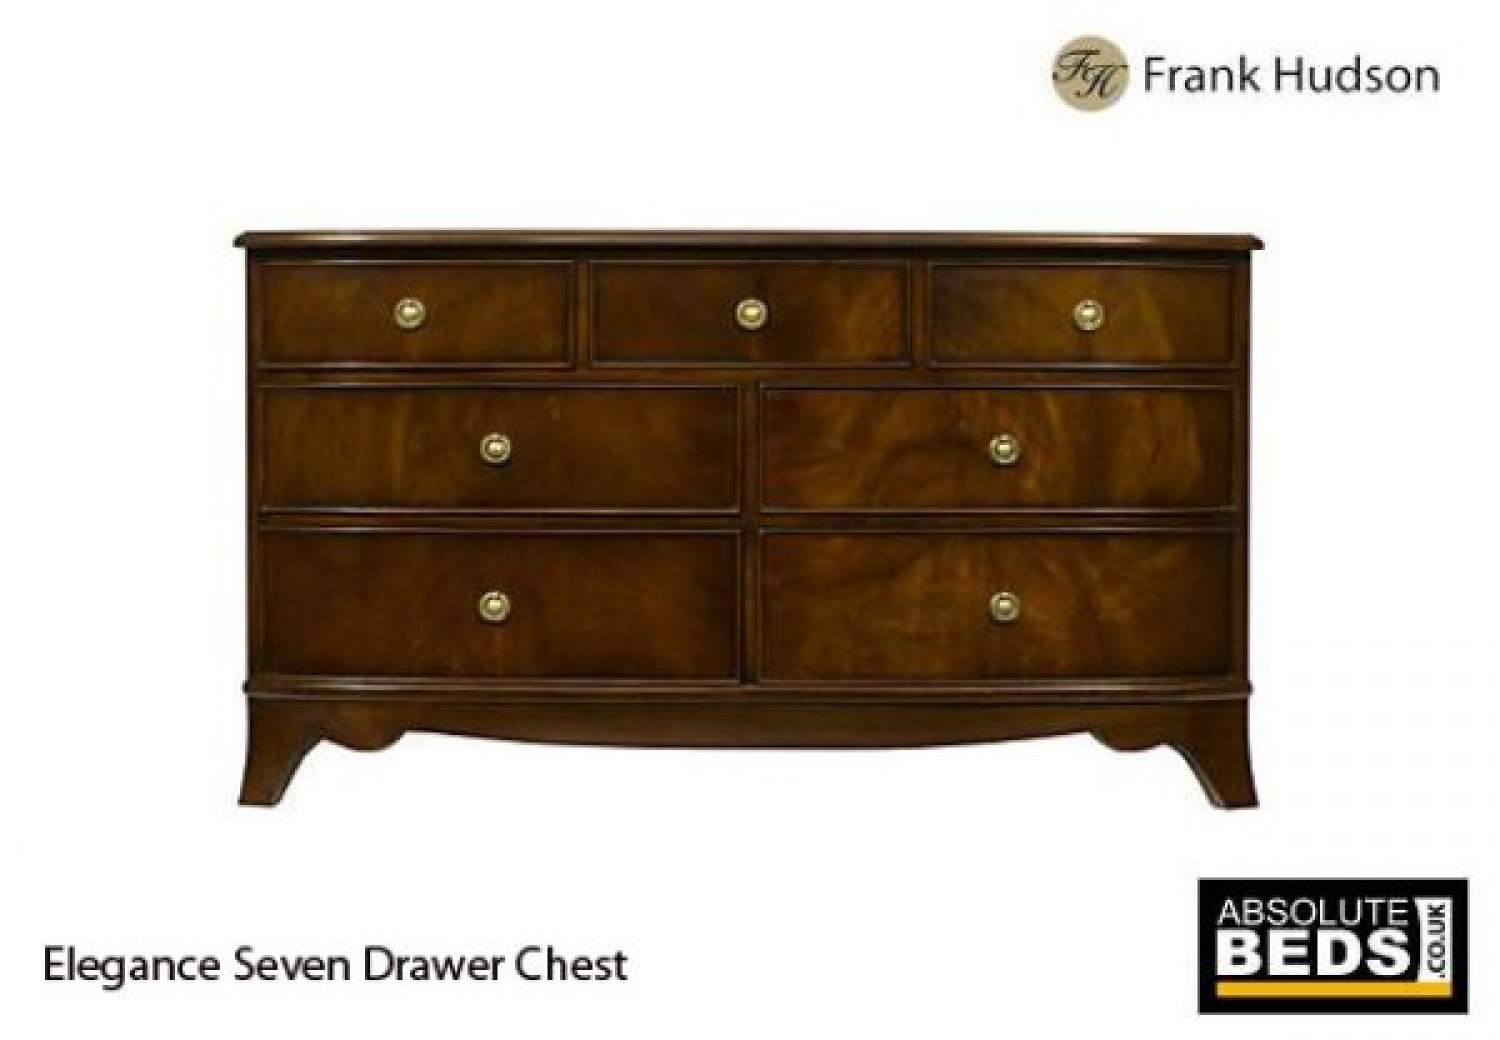 frank hudson elegance 4+3 drawer chest image